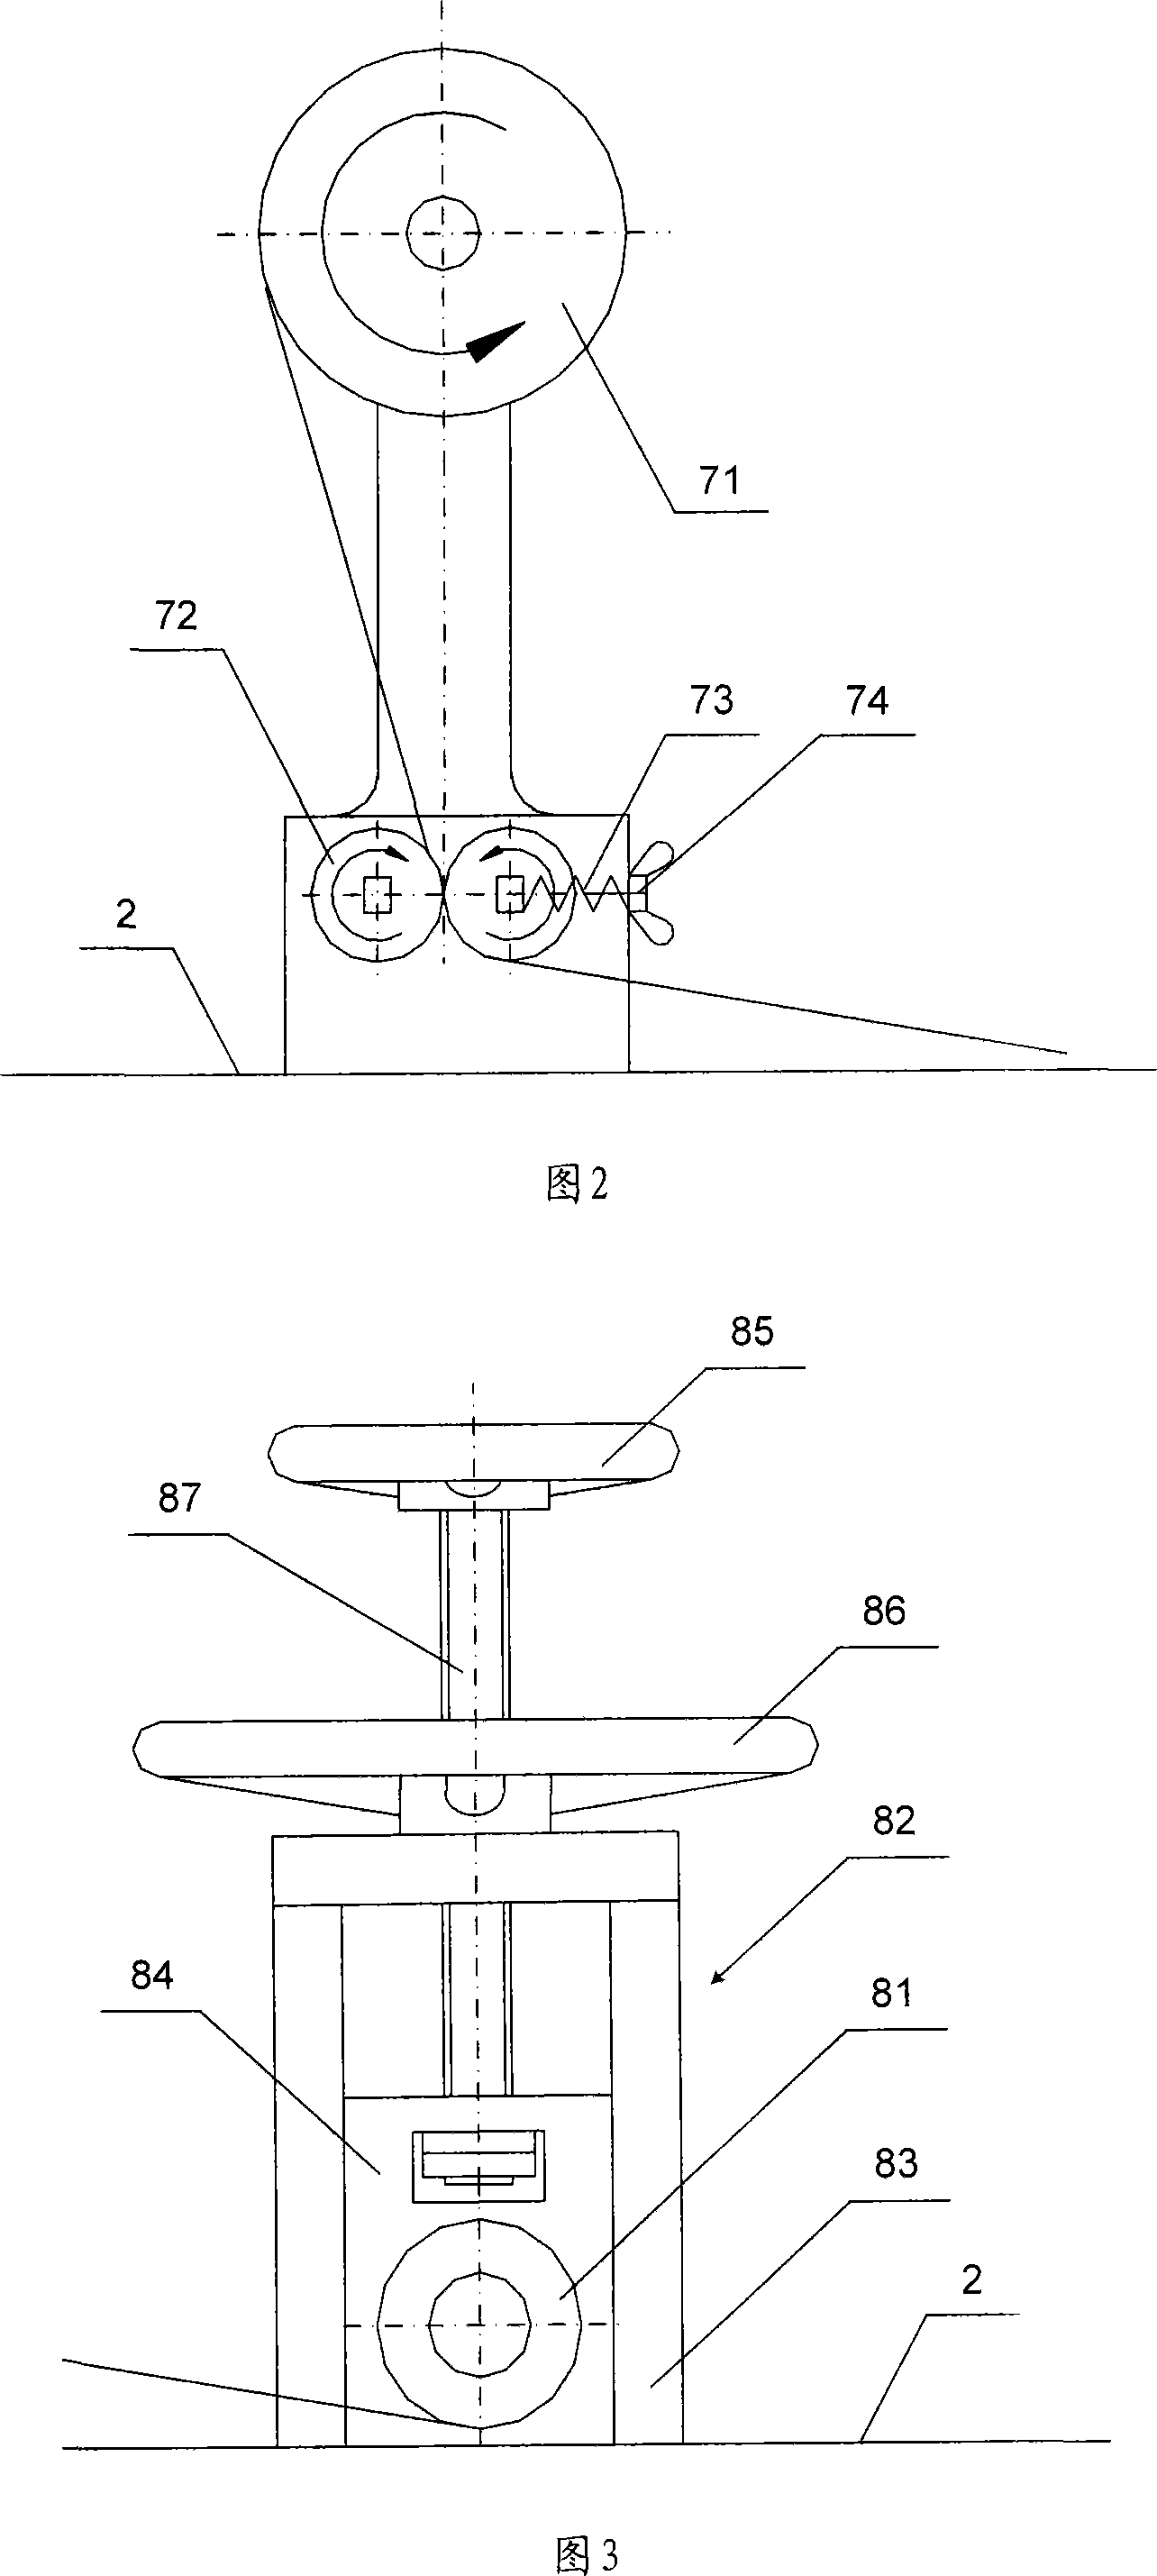 Nano-plate plane glue distributing device and method